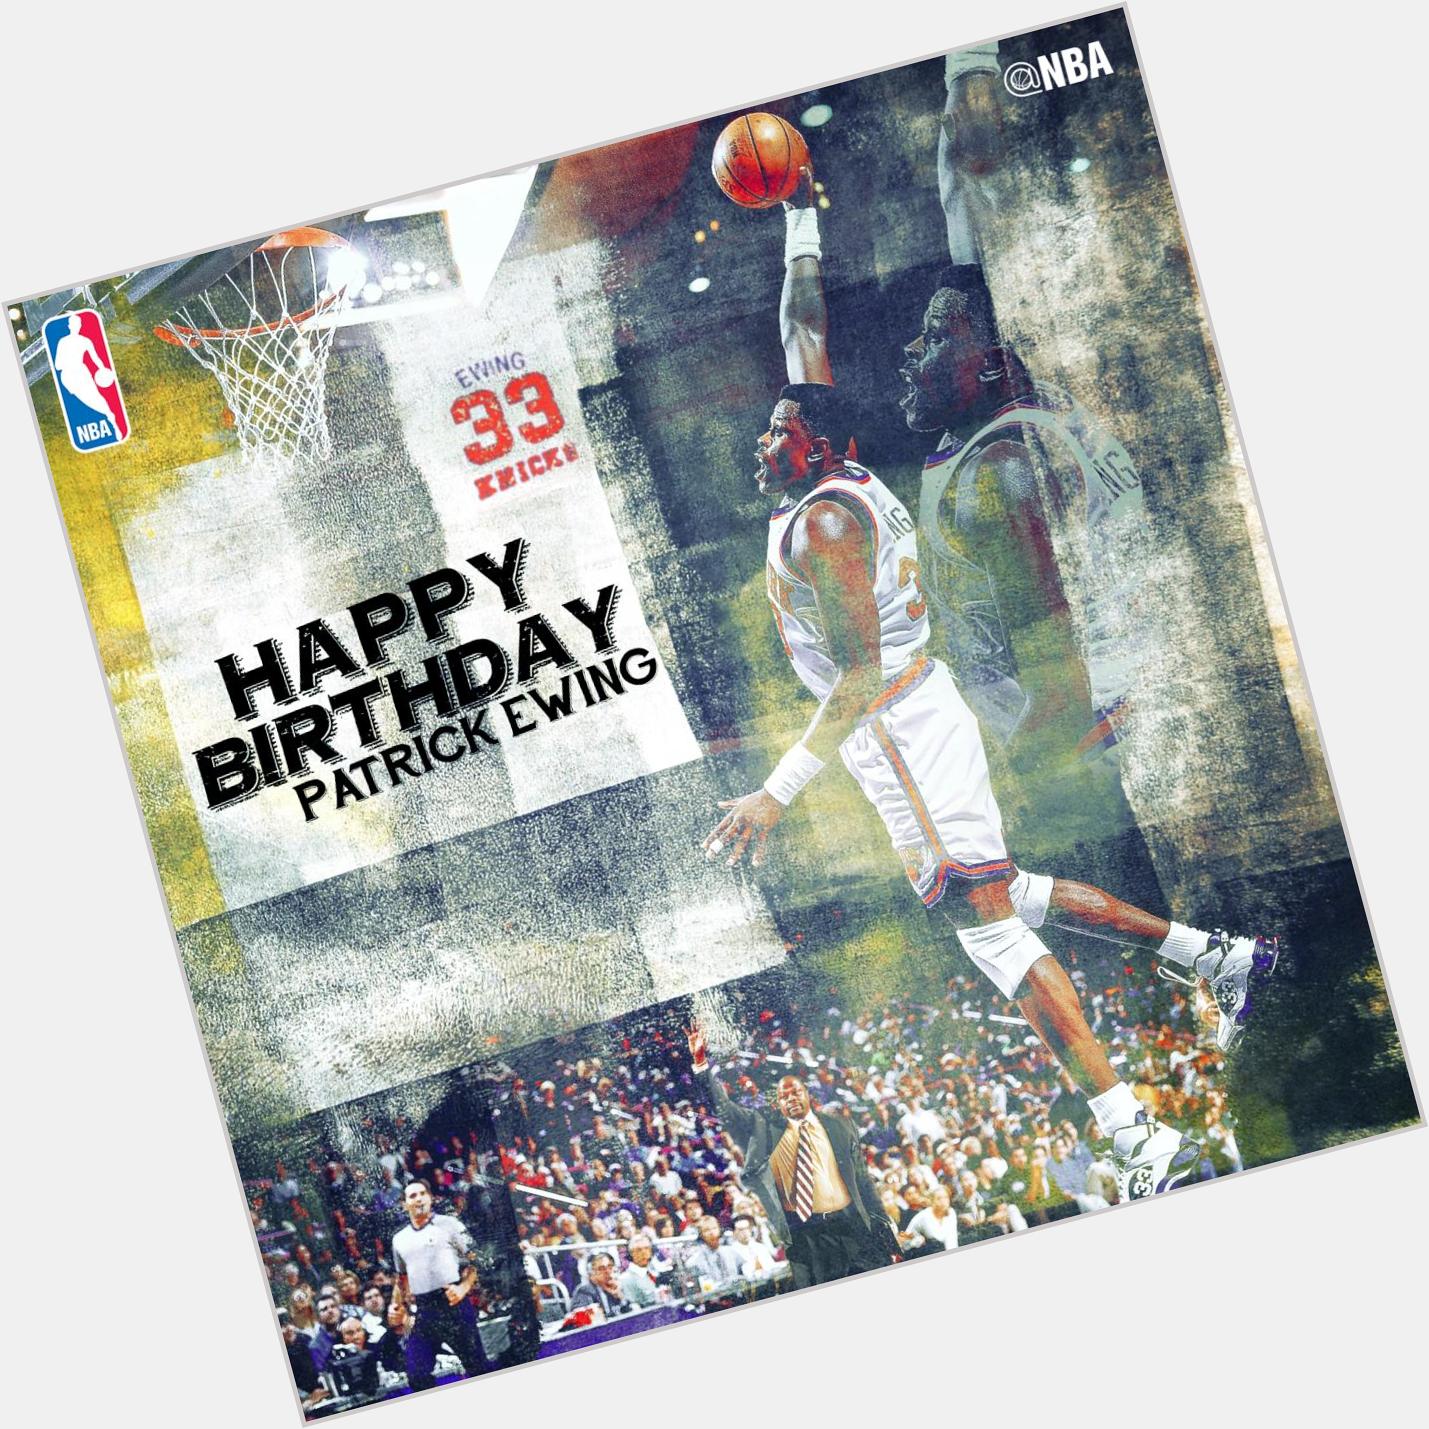   Join us in wishing NBA legend PATRICK EWING a HAPPY BIRTHDAY!  MY IDOL 